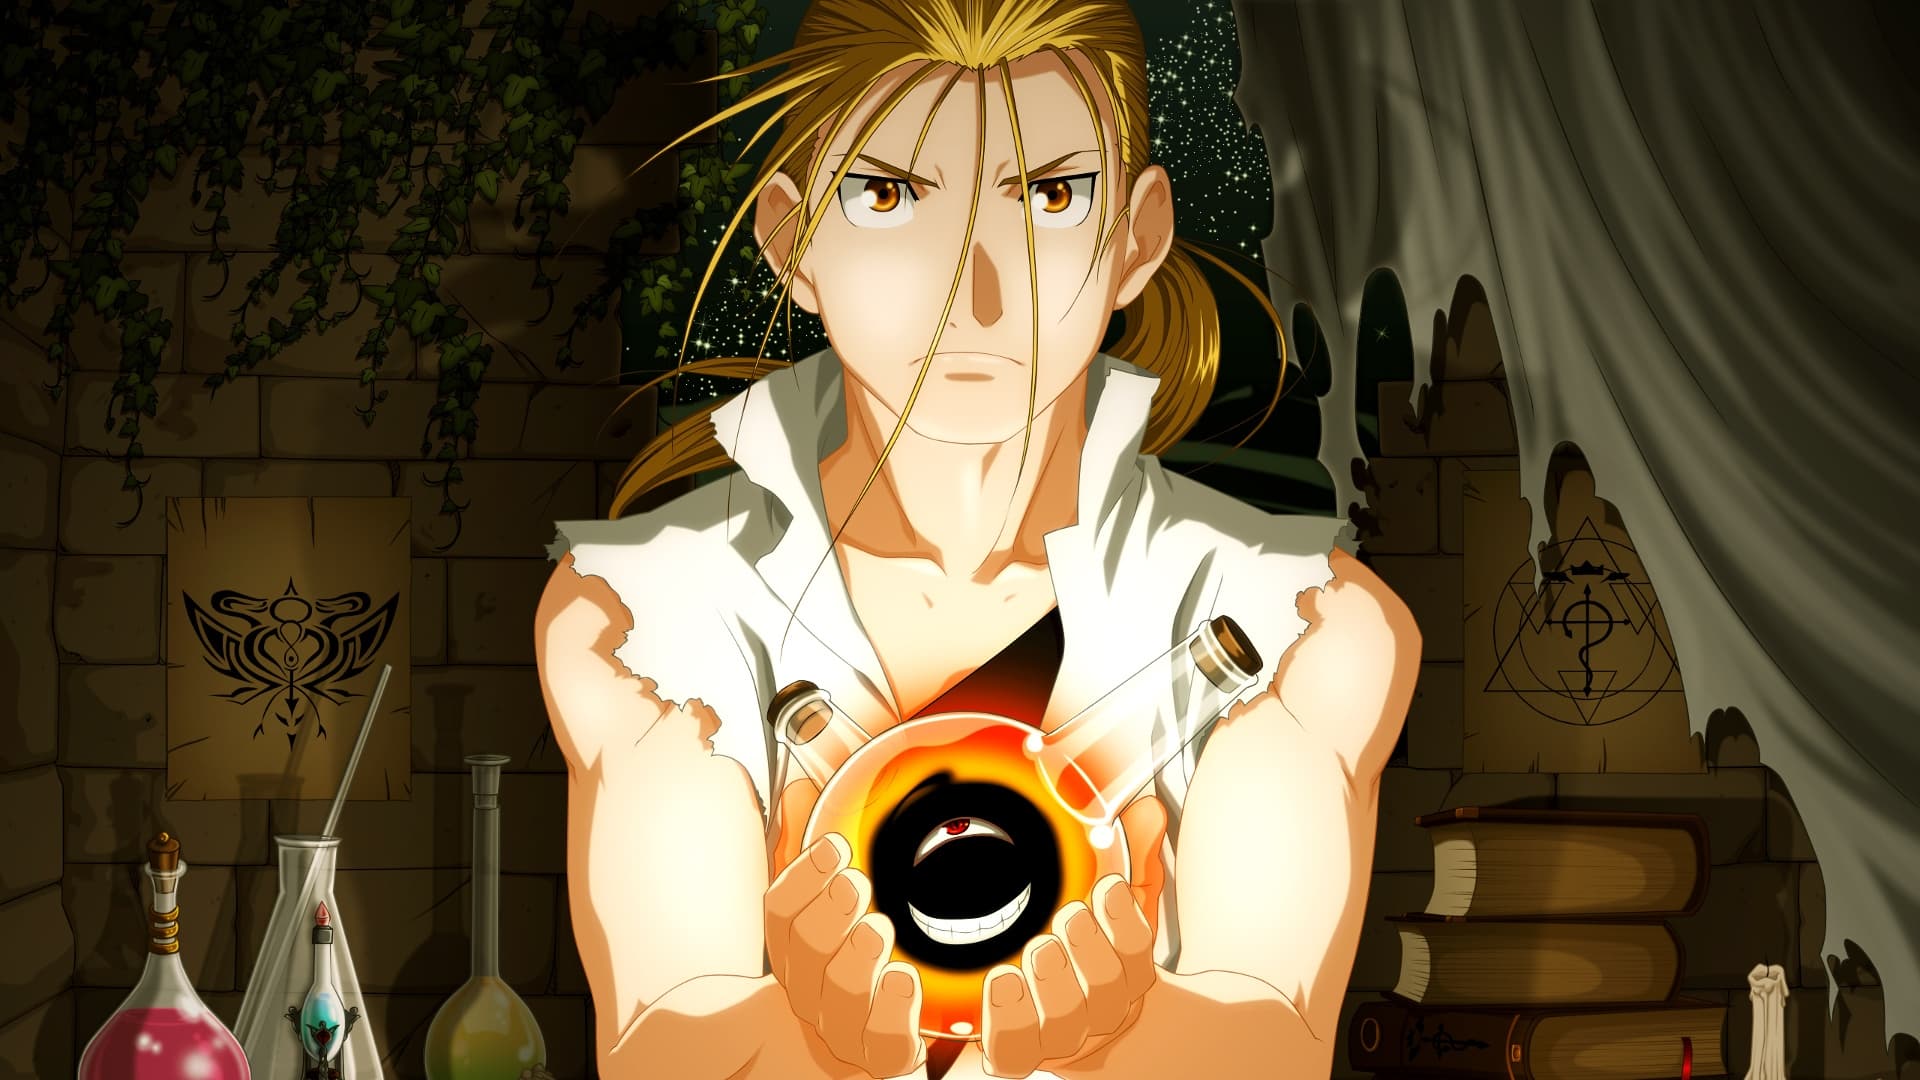 Fullmetal Alchemist: Shamballa hódítója (2005)